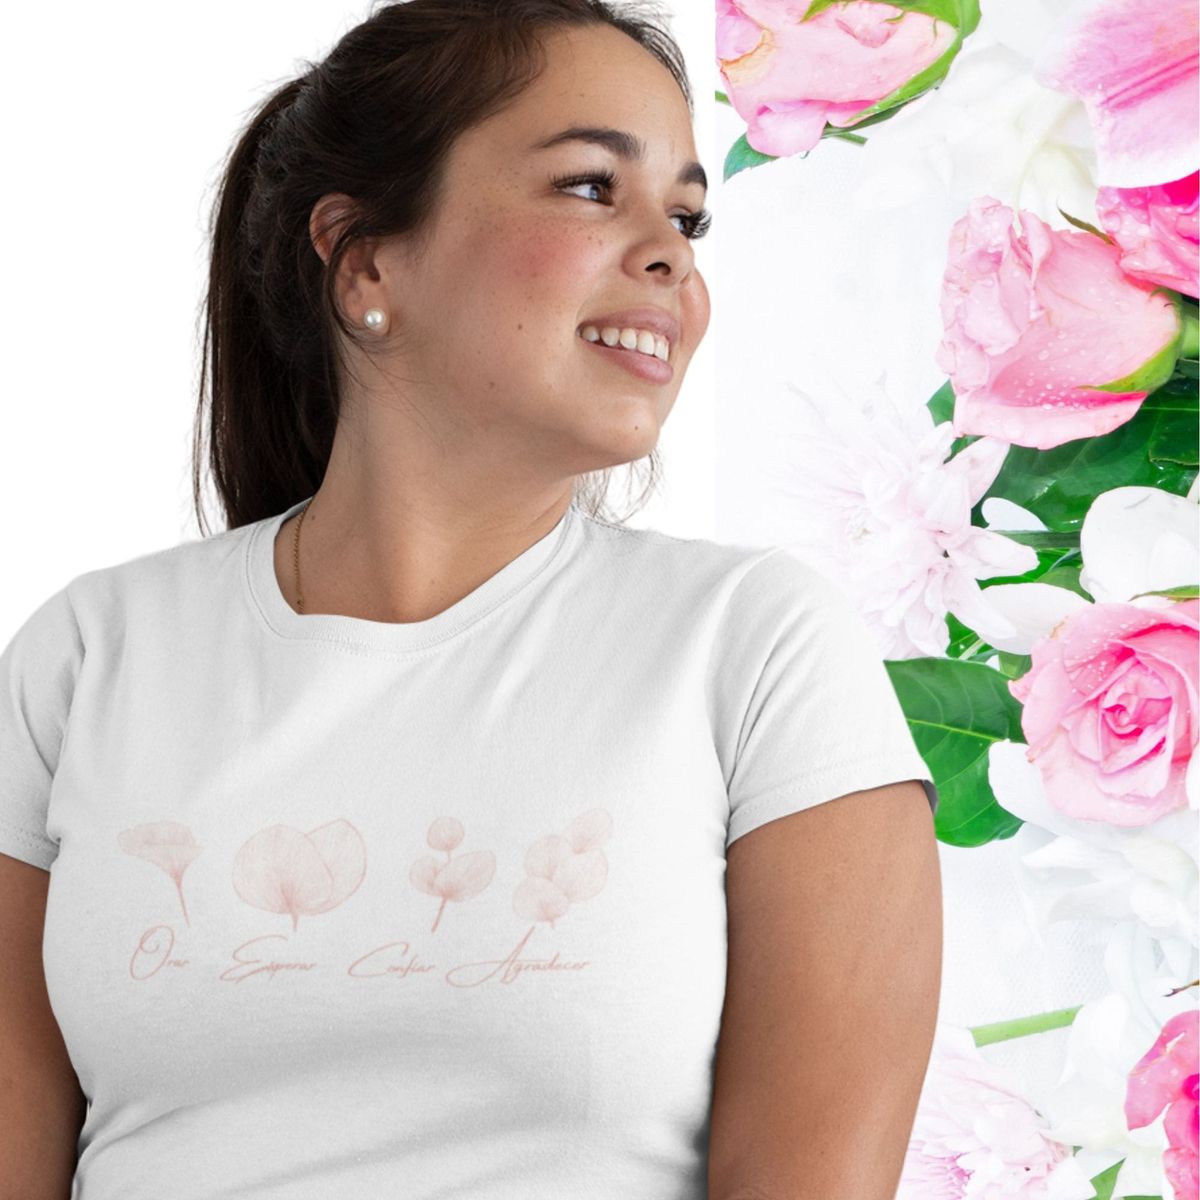 Nome do produto: Camiseta Feminina Plus Size Orar Esperar Confiar Agradecer